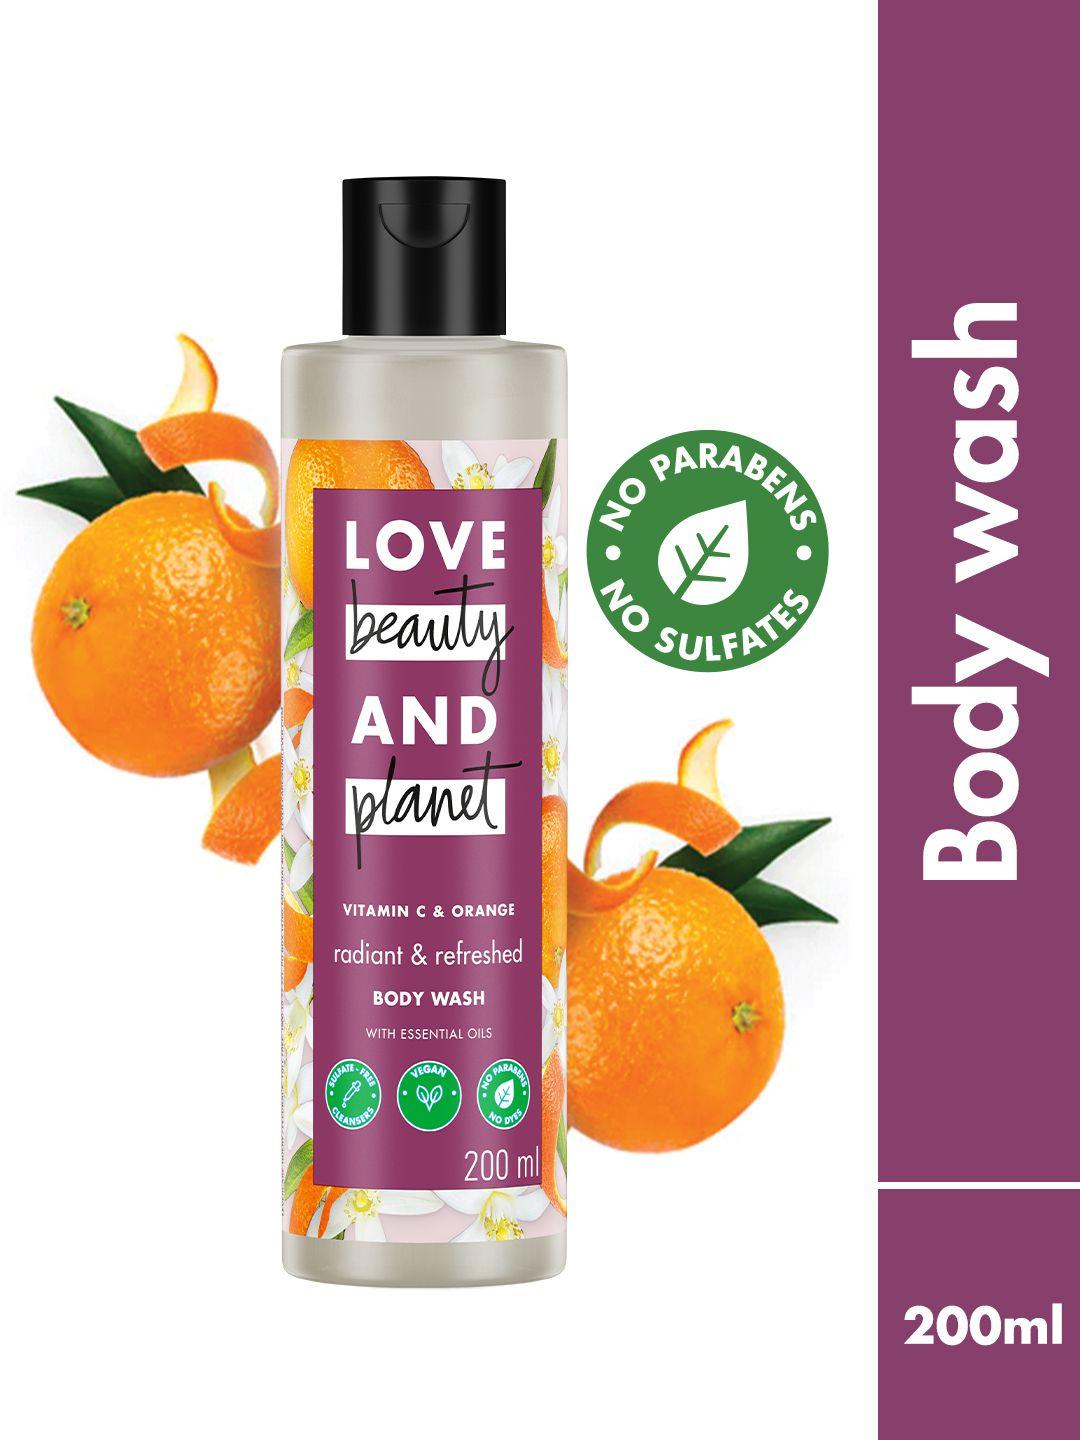 love beauty & planet vitamin c & orange body wash for glowing skin - 200ml